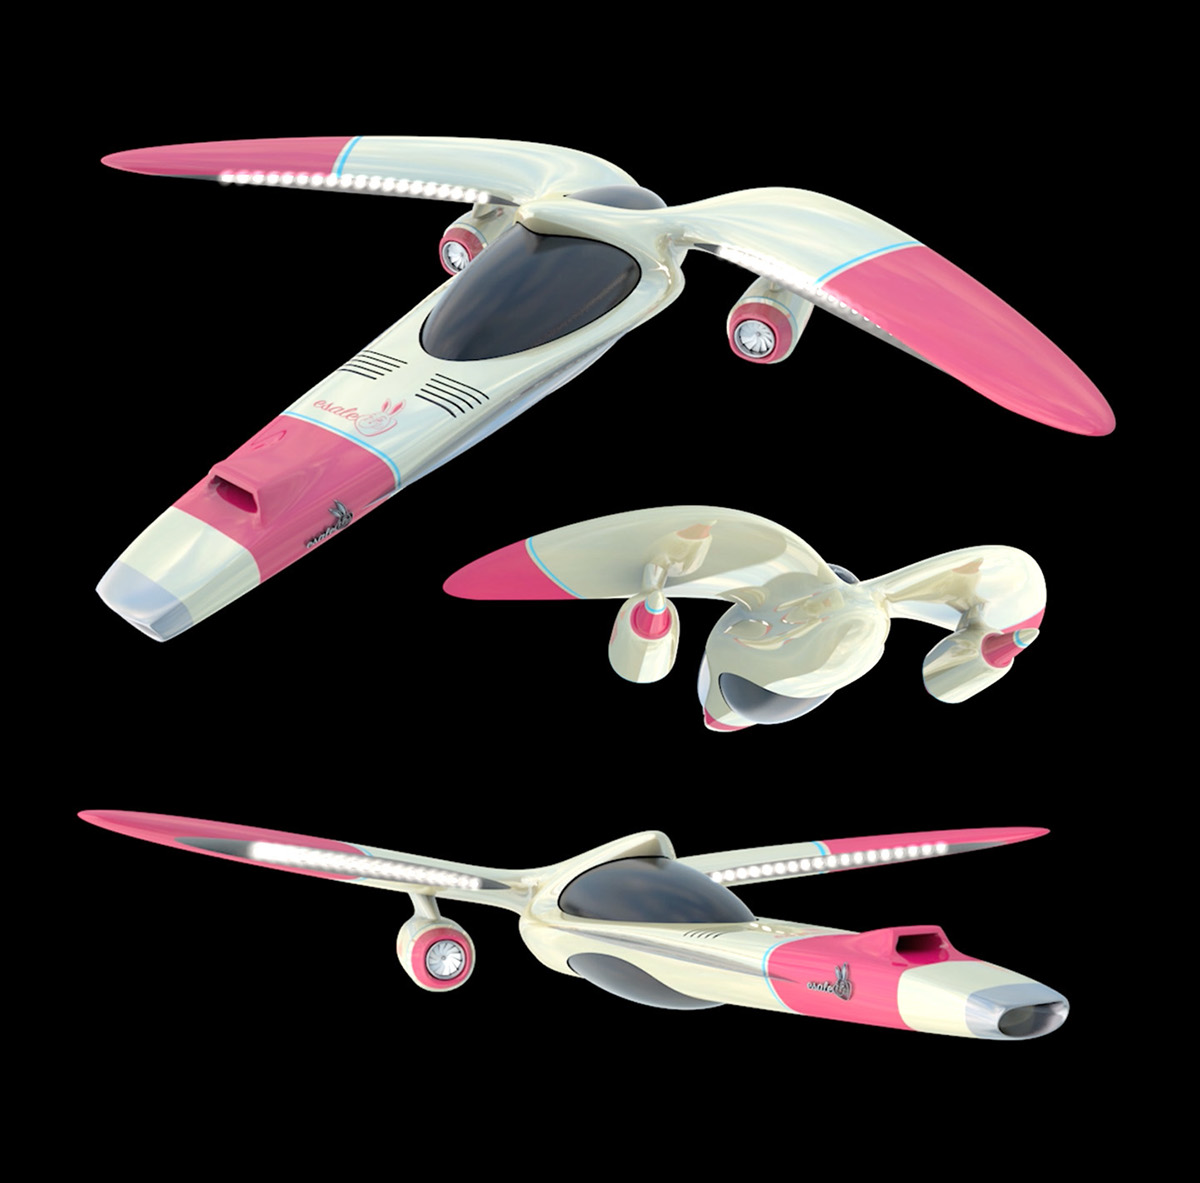 design c4d futurecar naveespacial toon lualab Aeroplane ship conceptcar 3D DUNK spaceship prototype retrofuturistic modeling